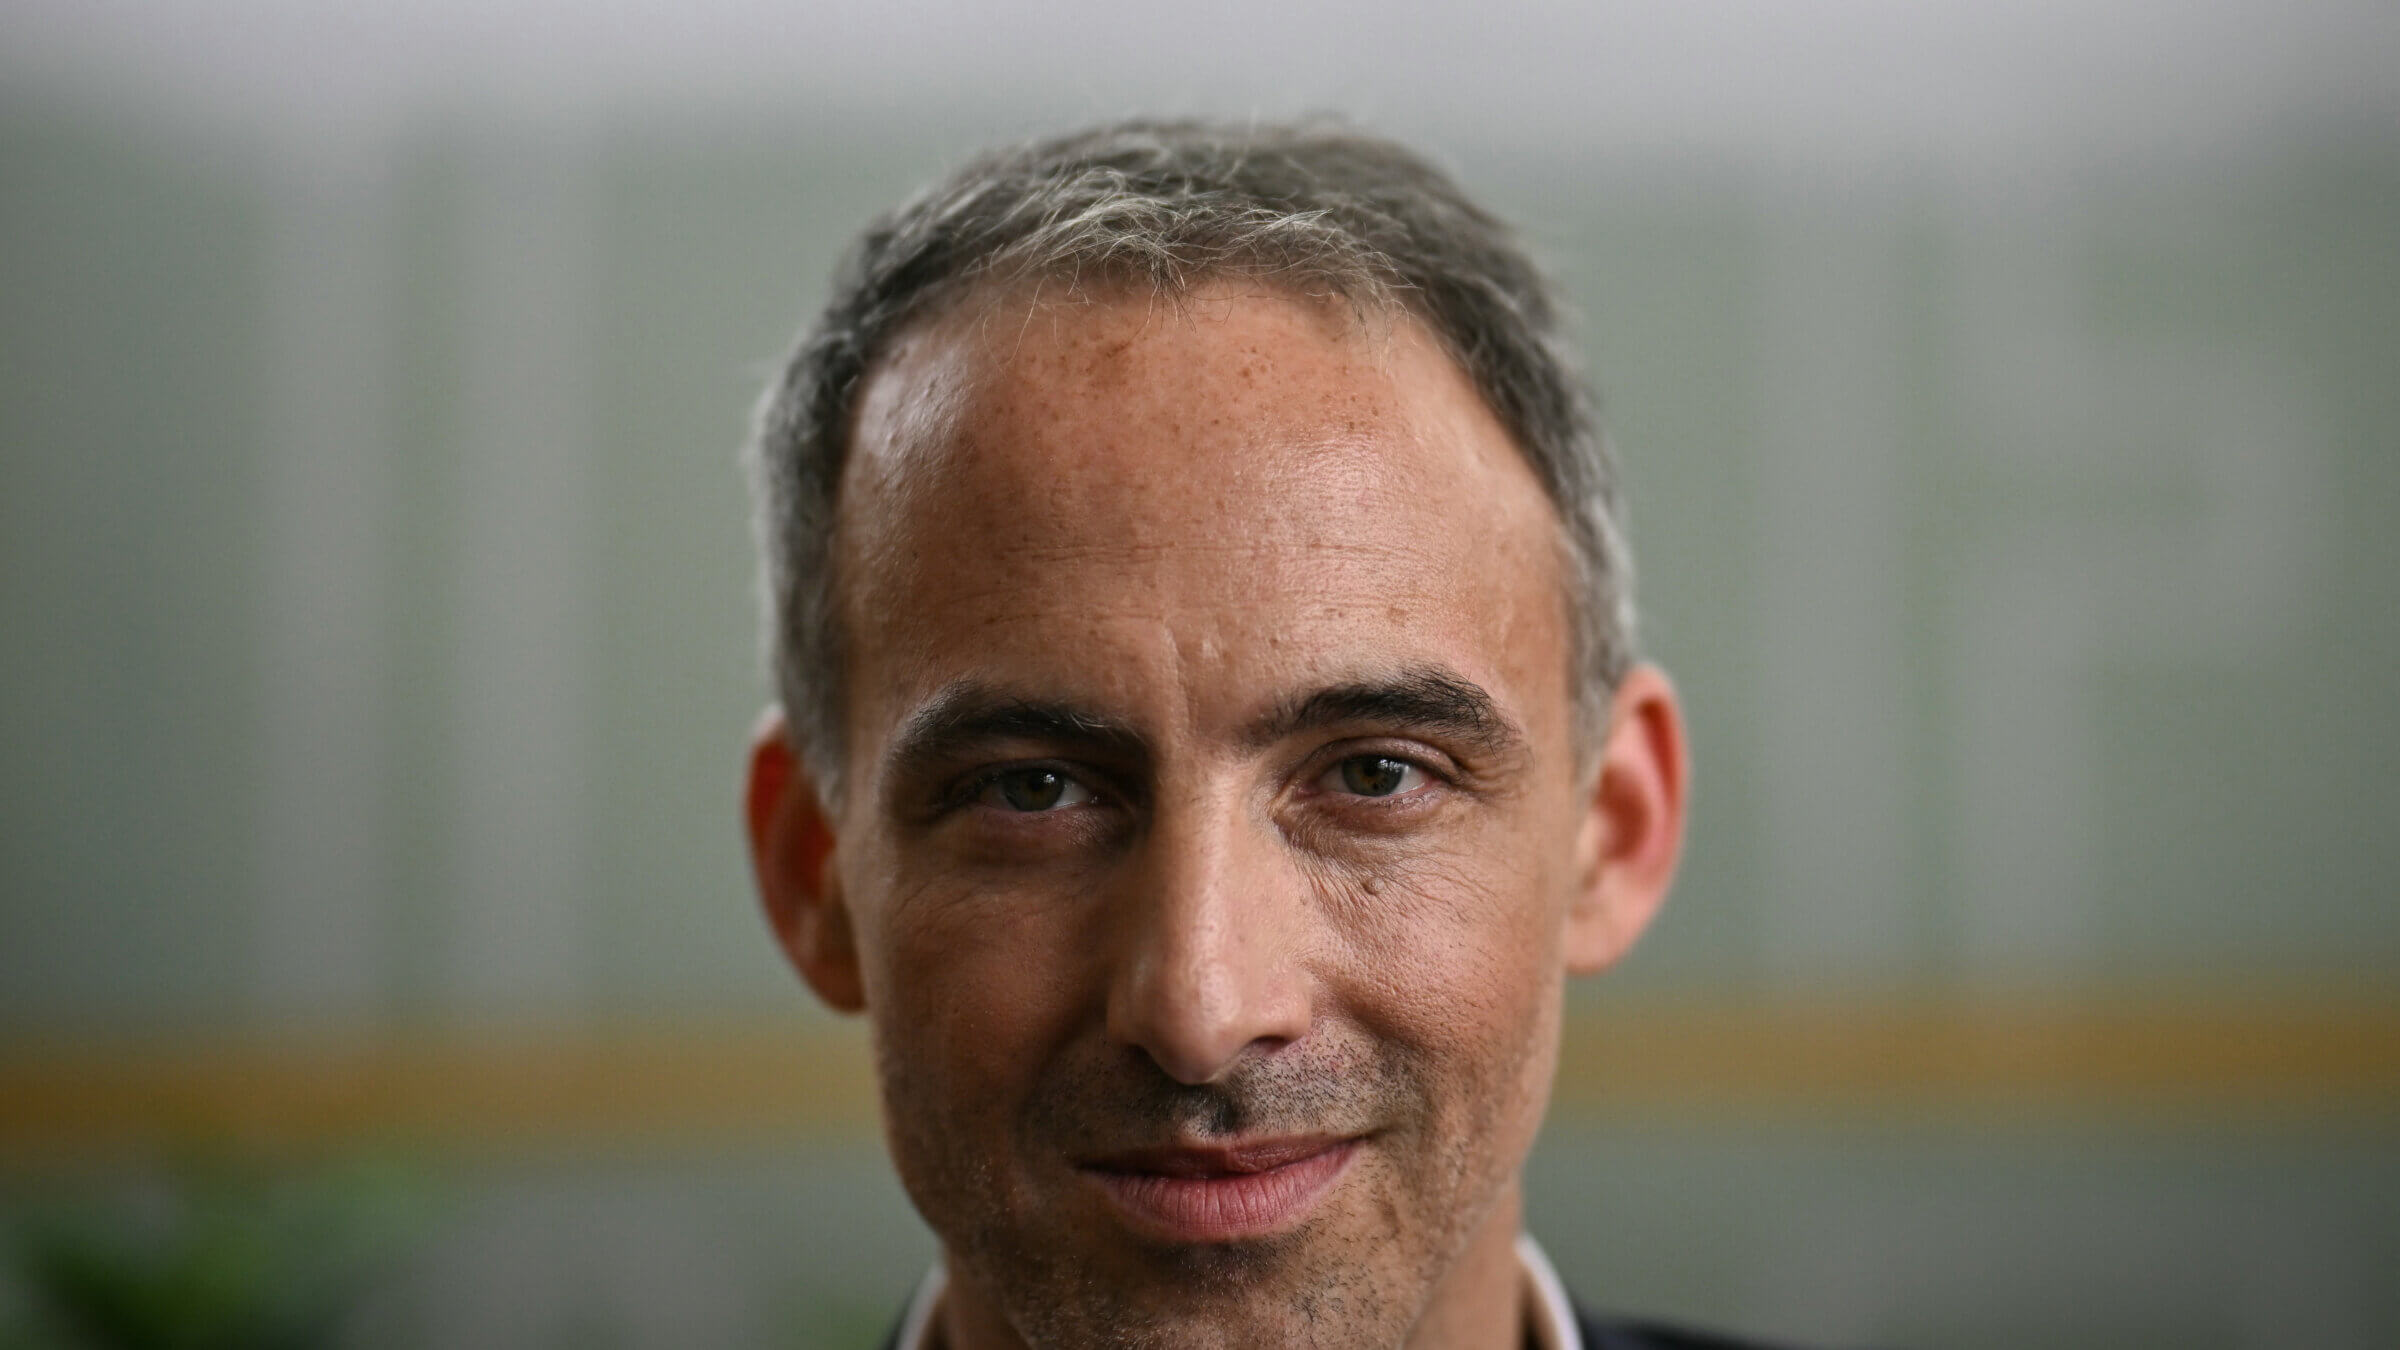 Raphaël Glucksmann, leader of the French Socialist Party.